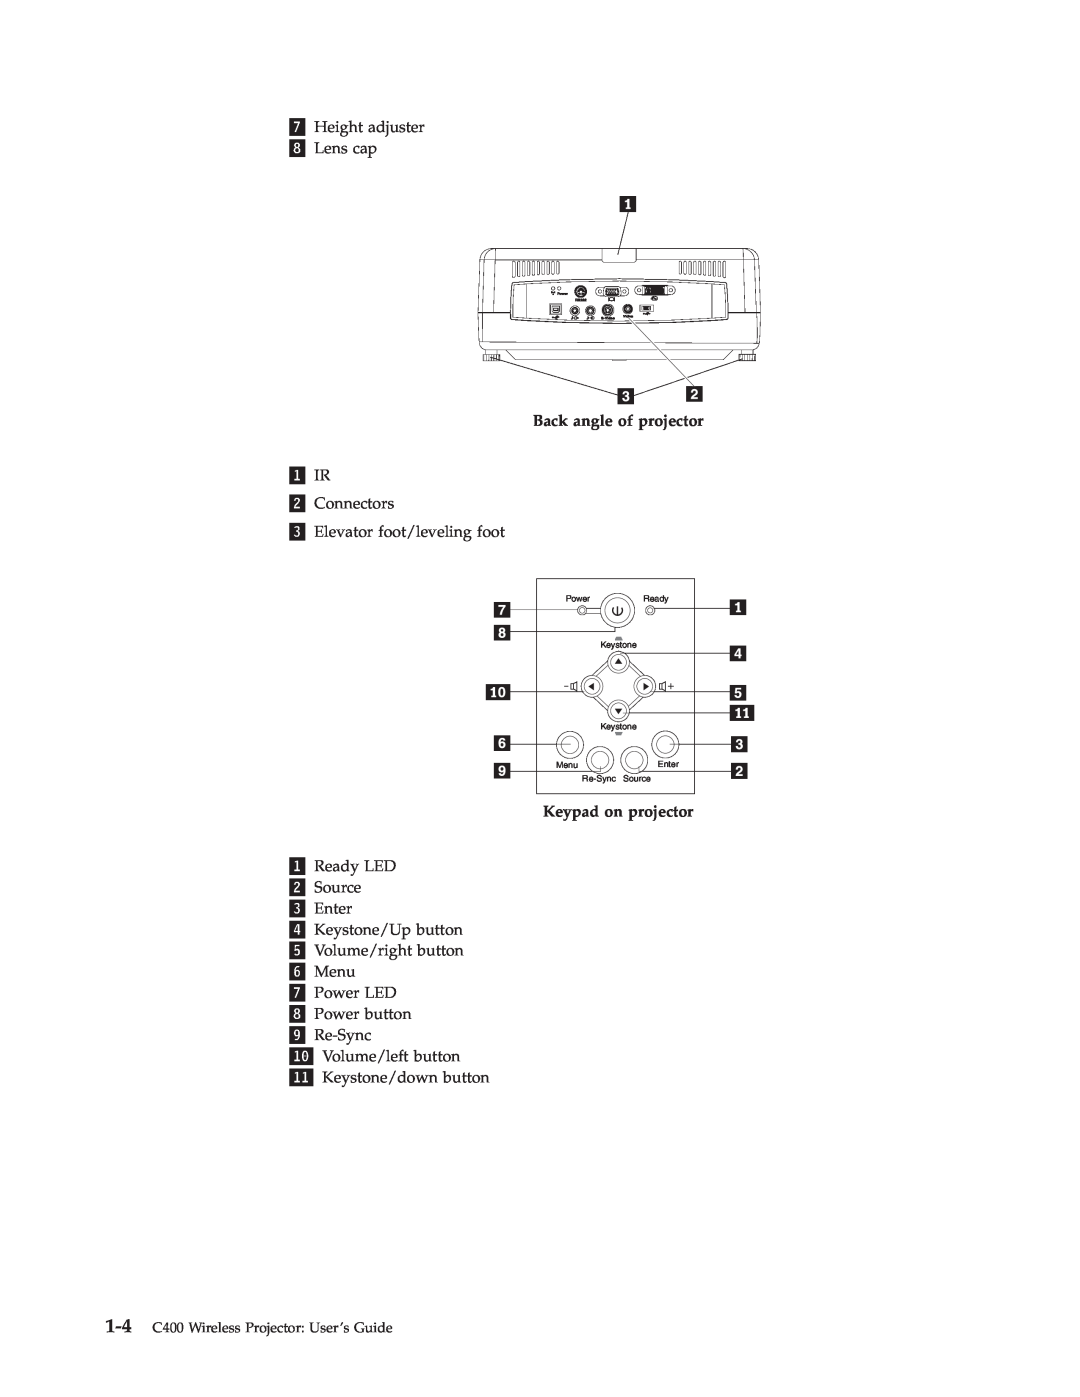 Lenovo manual 1-4 C400 Wireless Projector: User’s Guide, Power, Ready, Keystone, Menu, Re-Sync, Source, Enter 